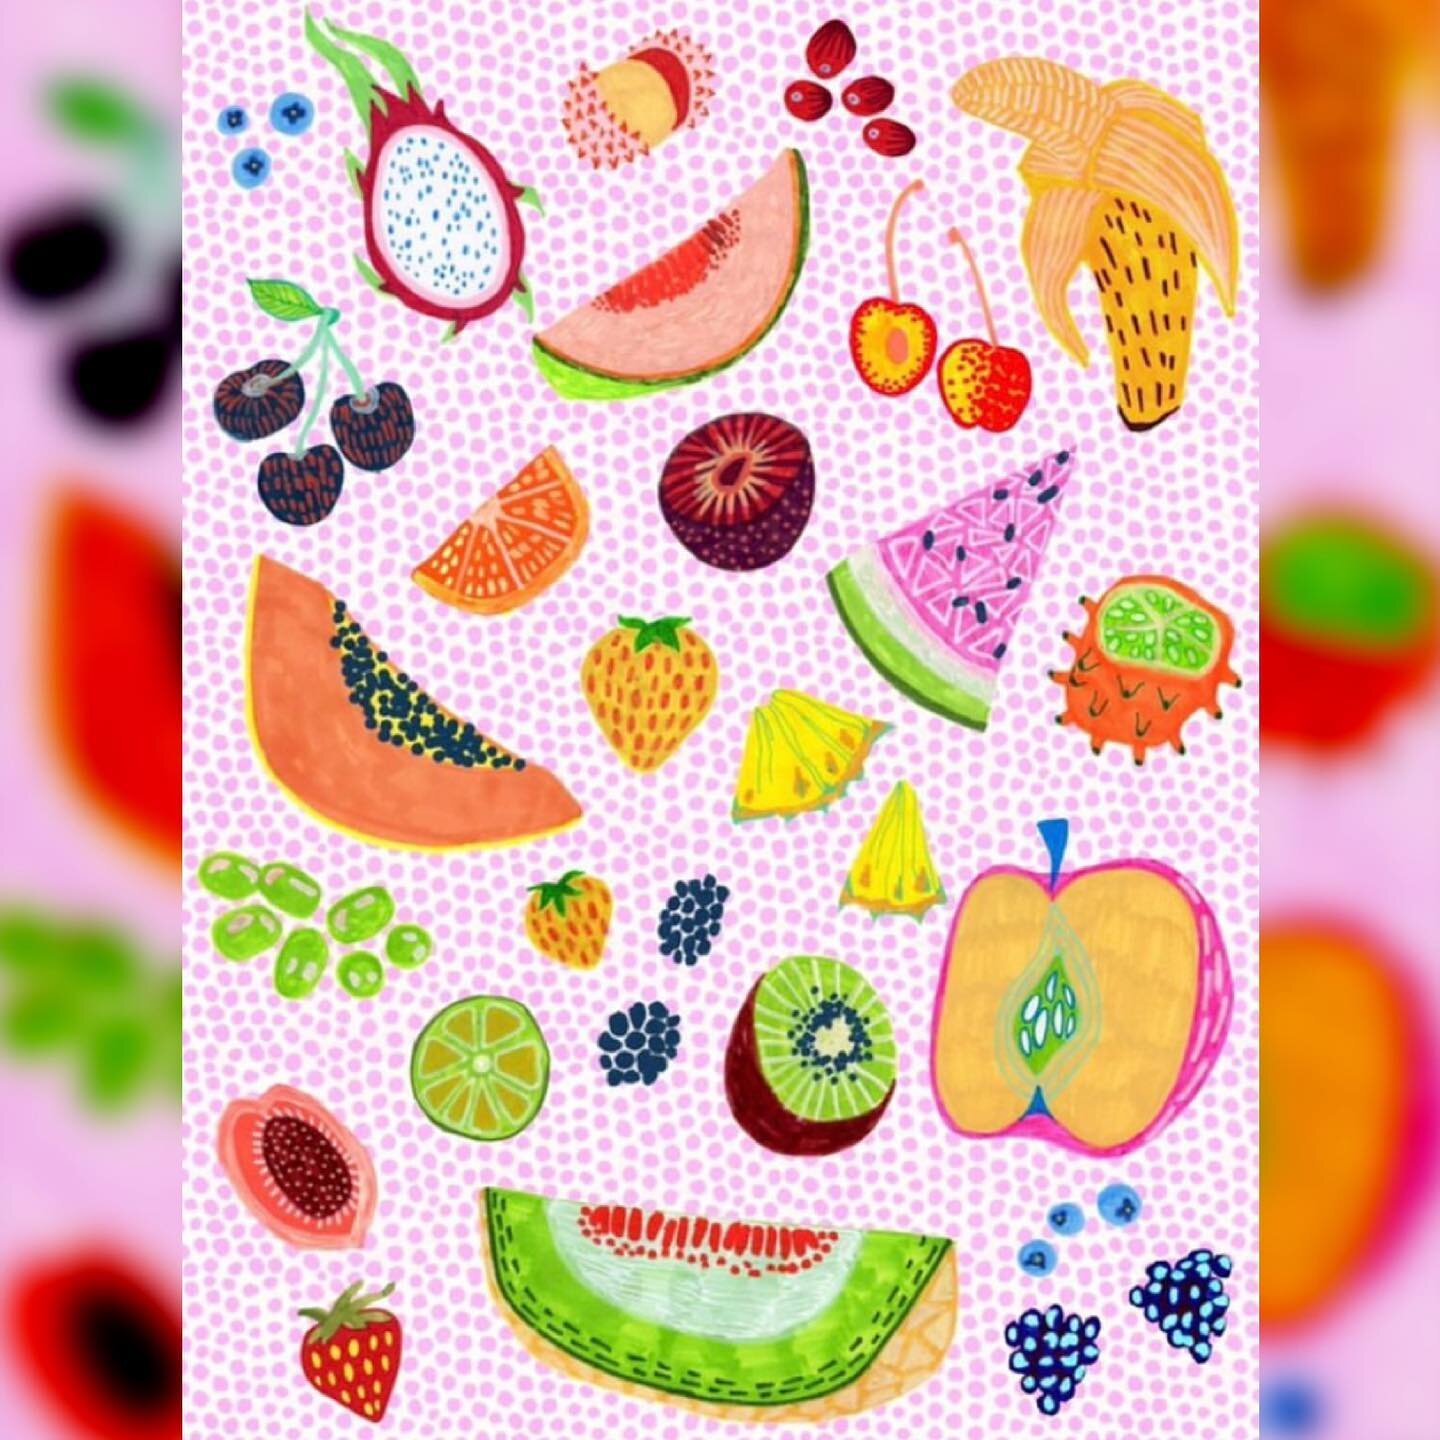 🍒$ummer Fr&ouml;&ouml;ts 🍉
.
.
#pink #draw #fruit #summer #hot #august #polkadots #juice #drawing #sketch #art #illustration #create #makeart #femaleartist #studio #banana #cherry #melon #apple #eat #snack #color #humpday